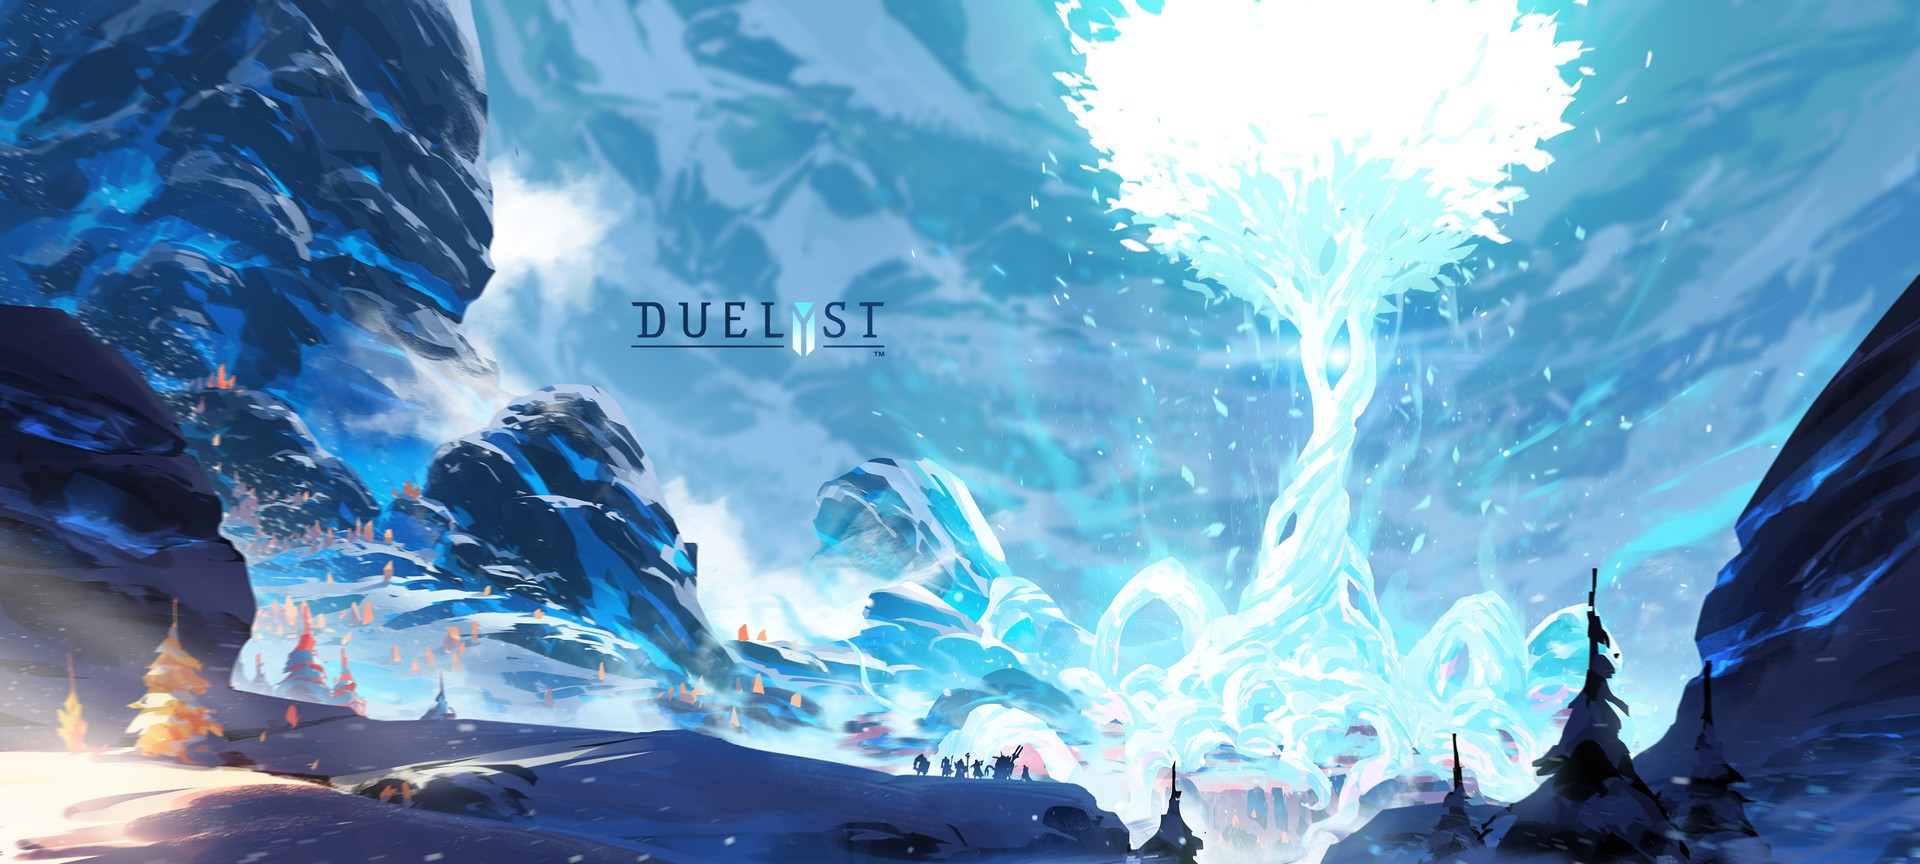 duelyst wallpaper,action adventure game,cg artwork,adventure game,geological phenomenon,anime